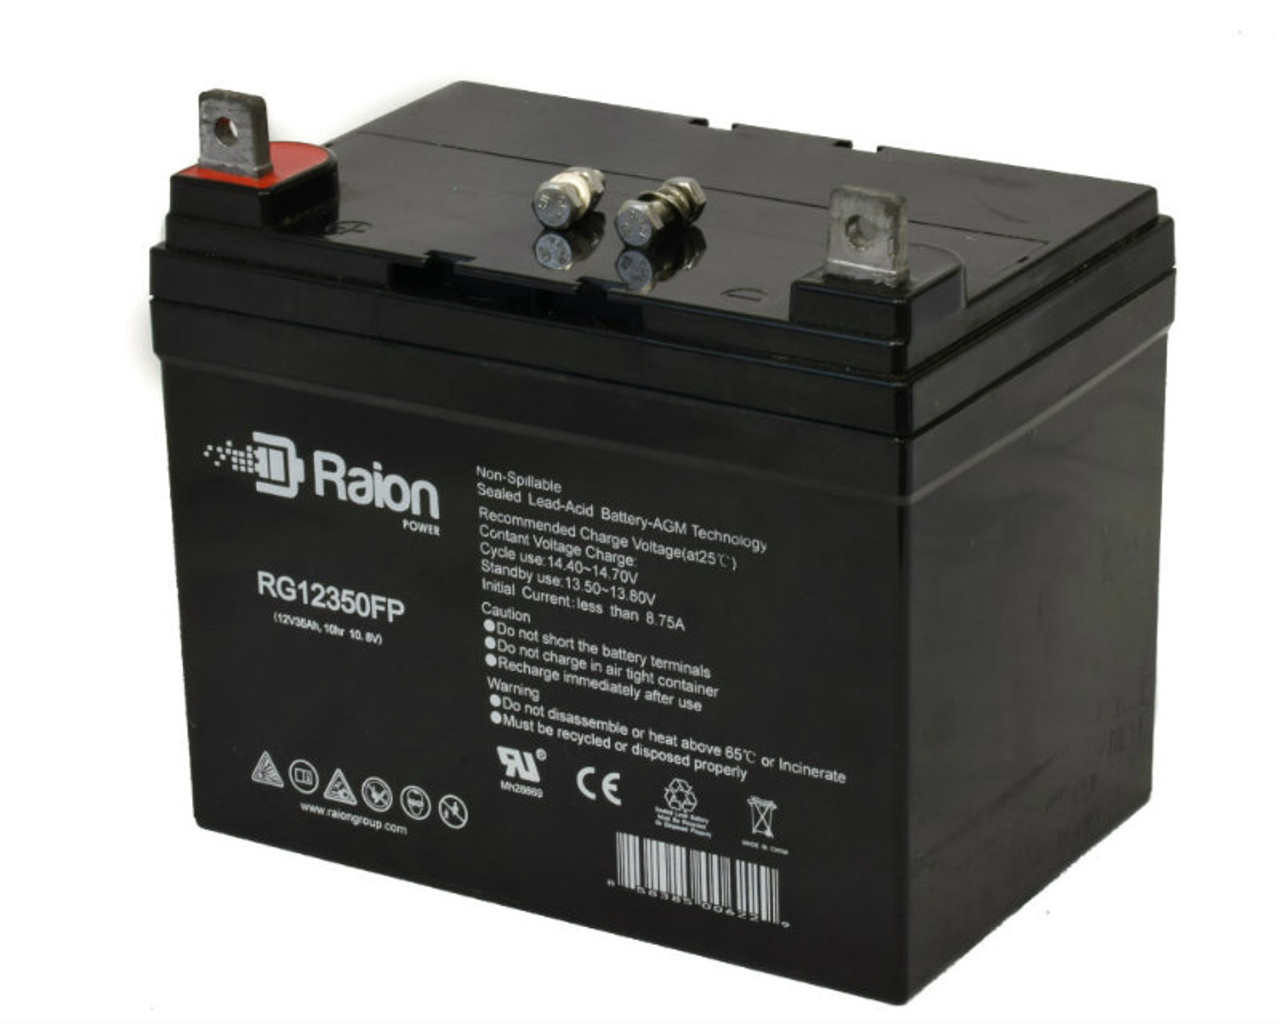 Raion Power RG12350FP 12V 35Ah Lead Acid Battery for Clore Automotive JNC950 Jump N Carry Jump Starter